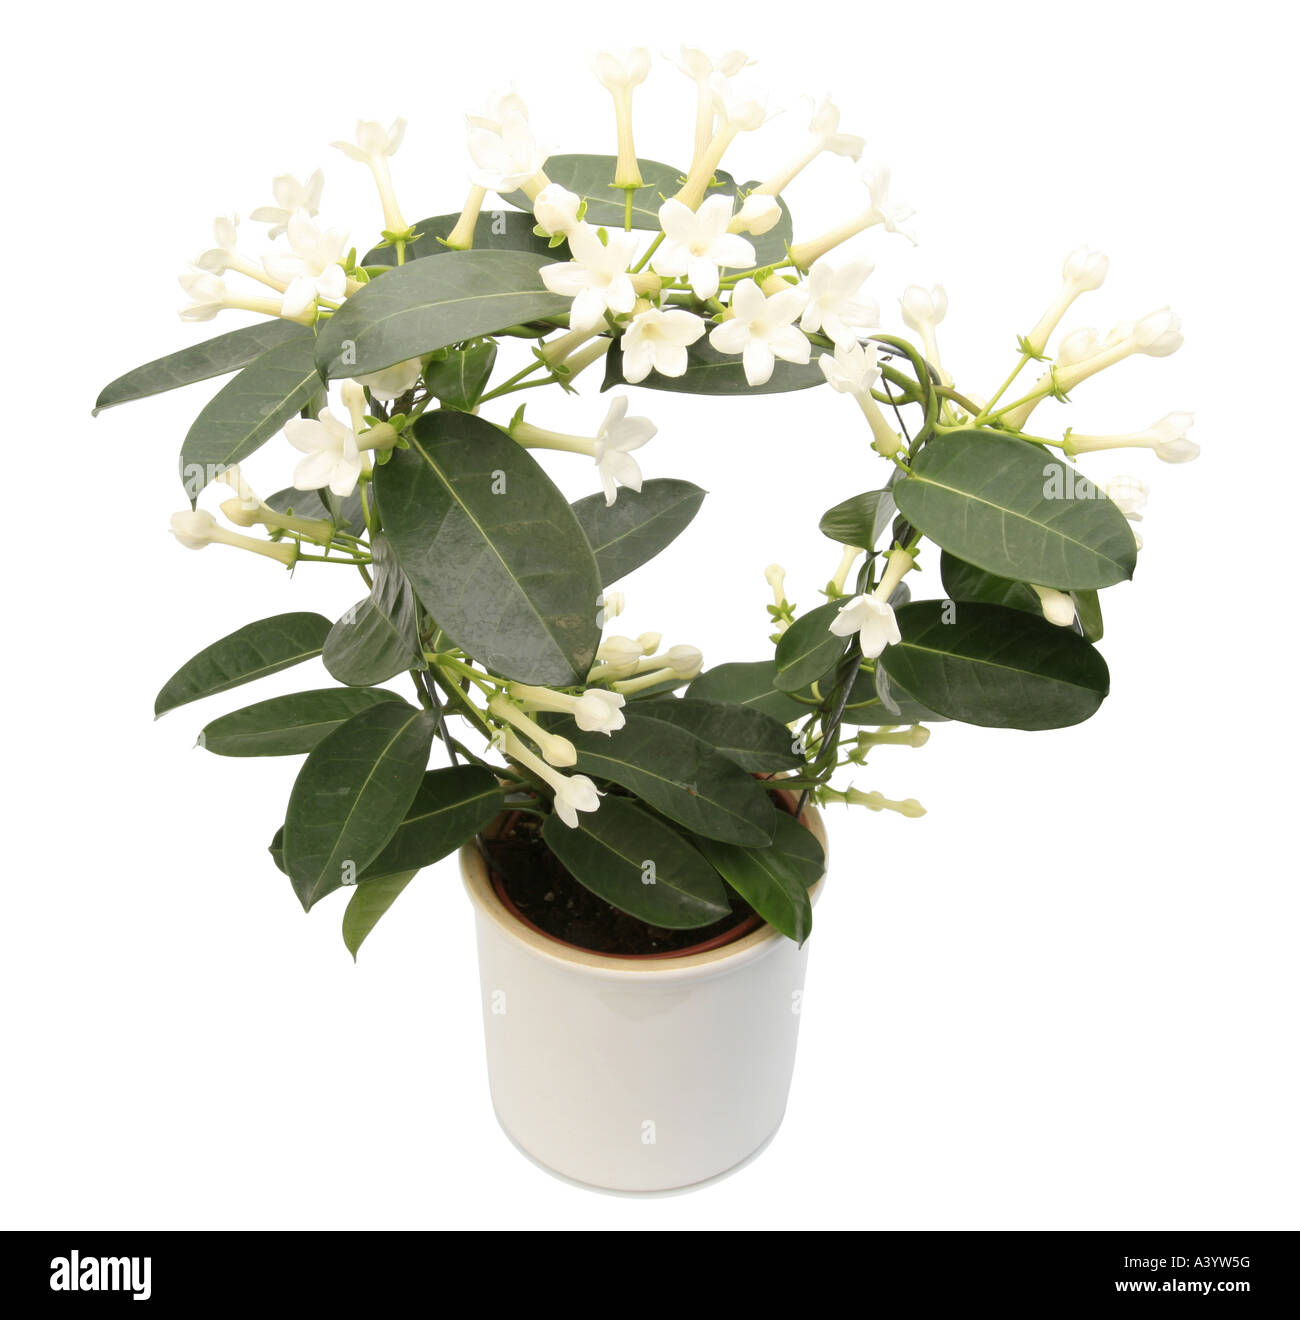 Madagascar Jasmine, Stephanotis, Wax Flower (Stephanotis floribunda), potted plant Stock Photo